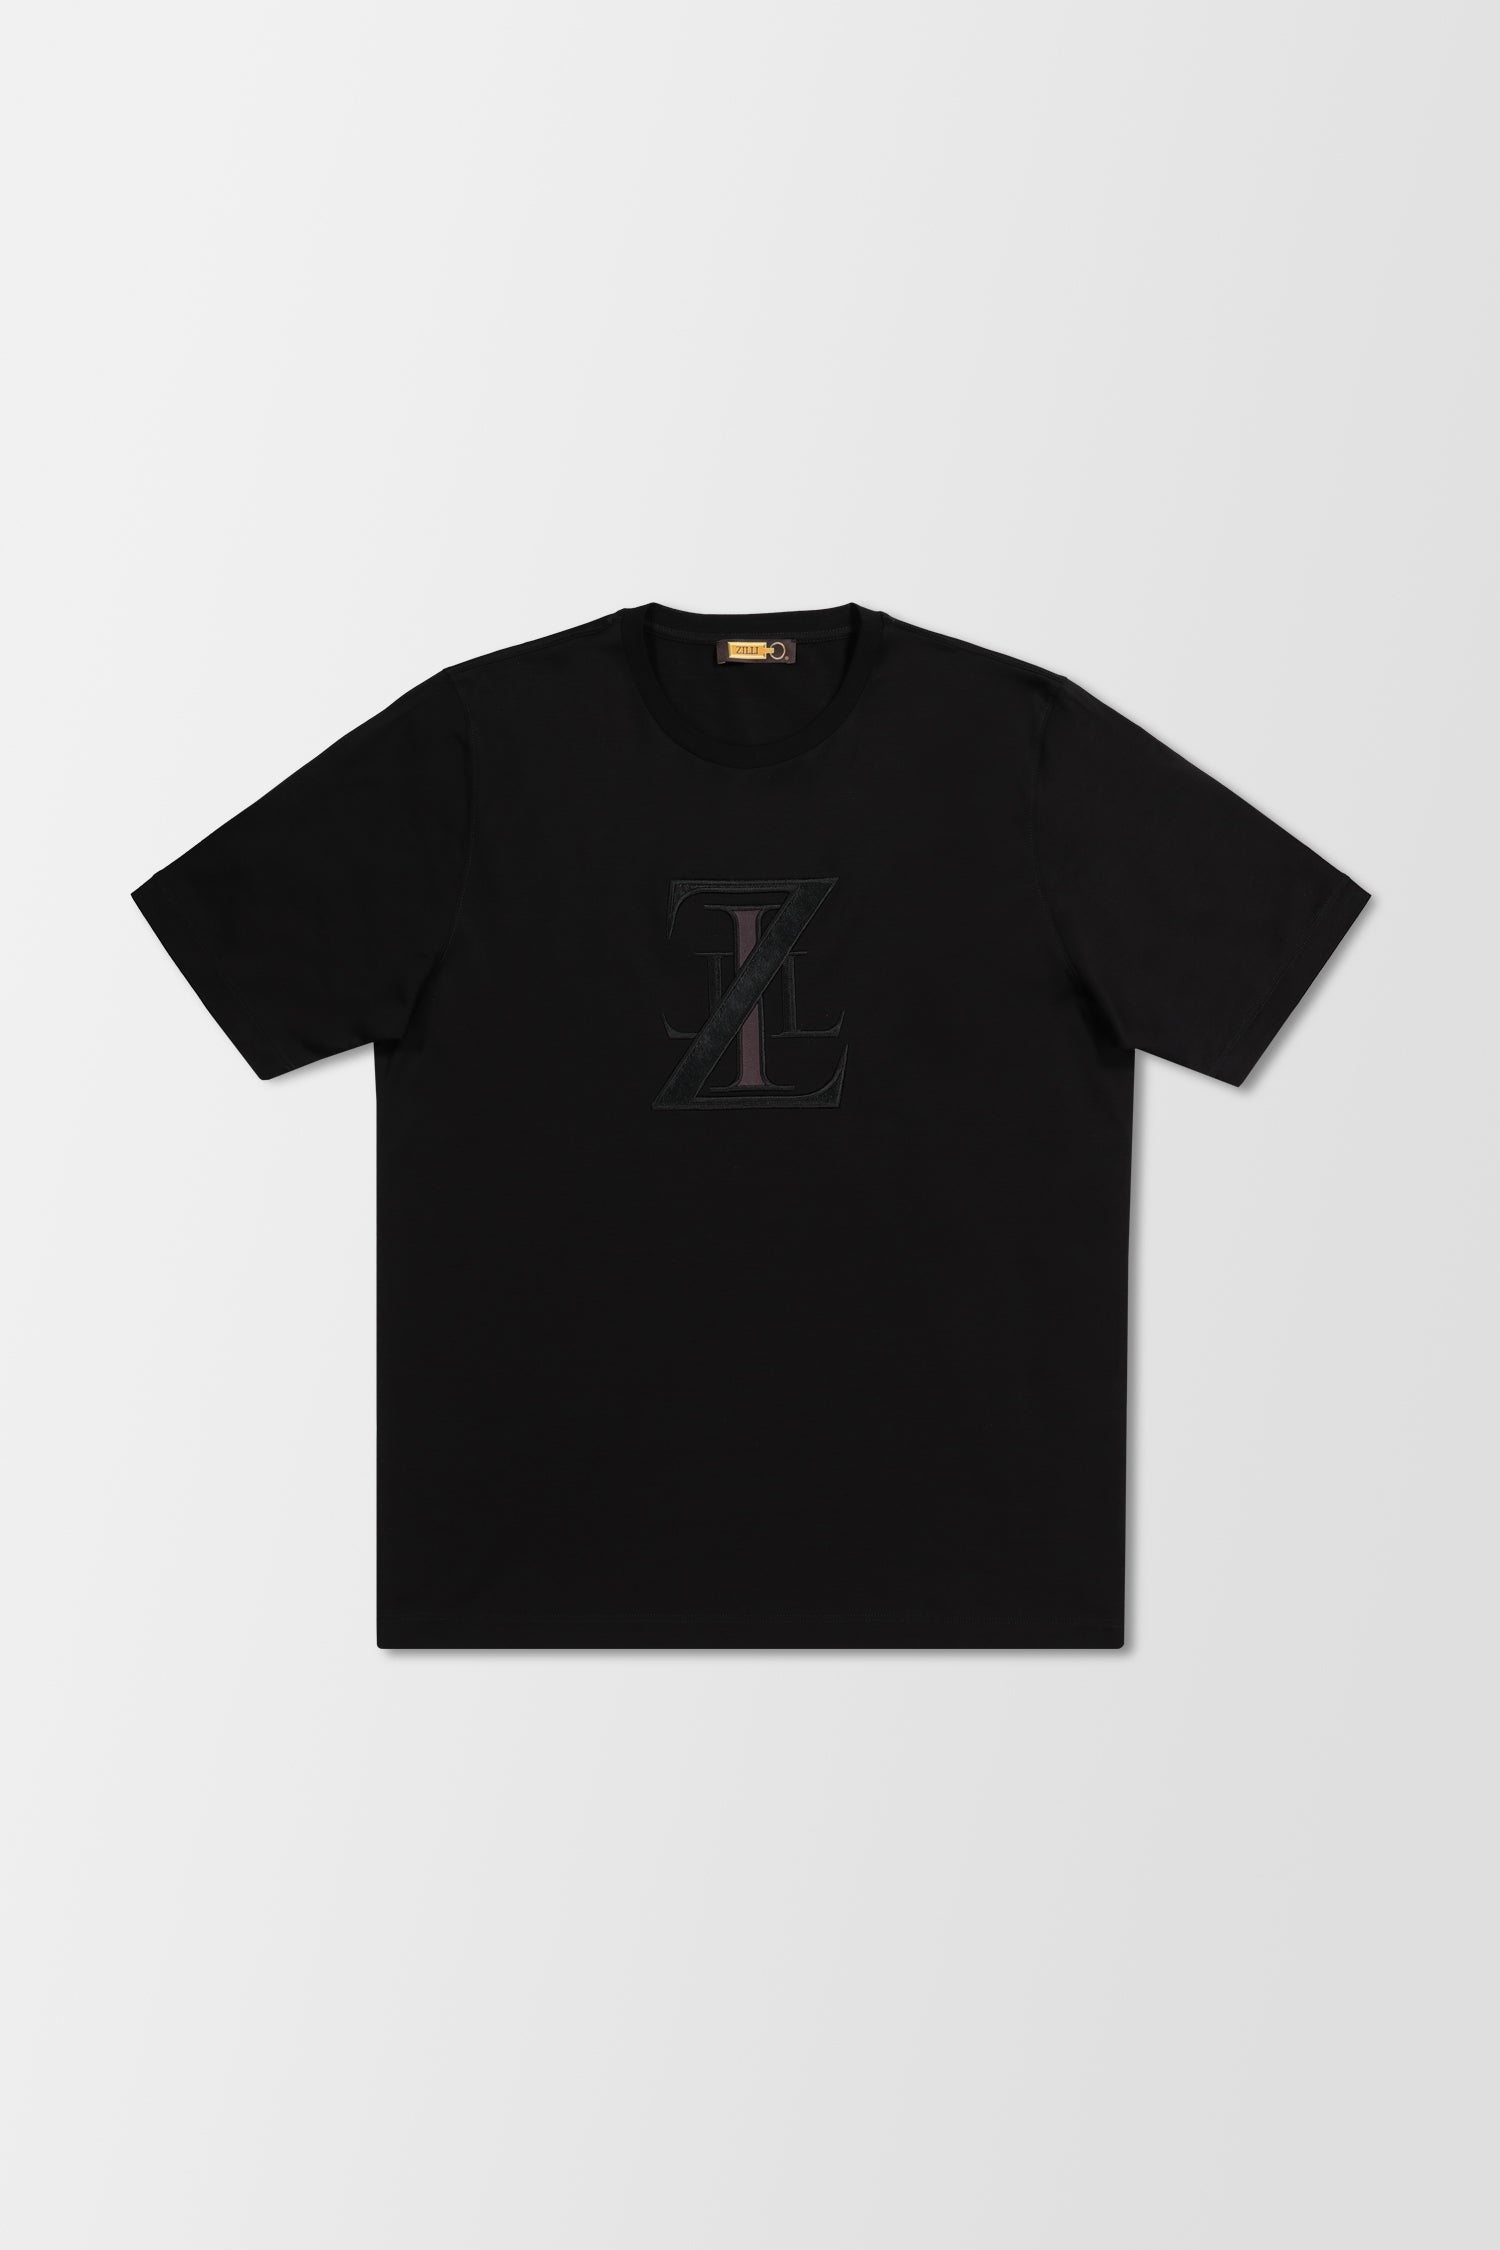 Zilli Black/Bordeaux T-Shirt